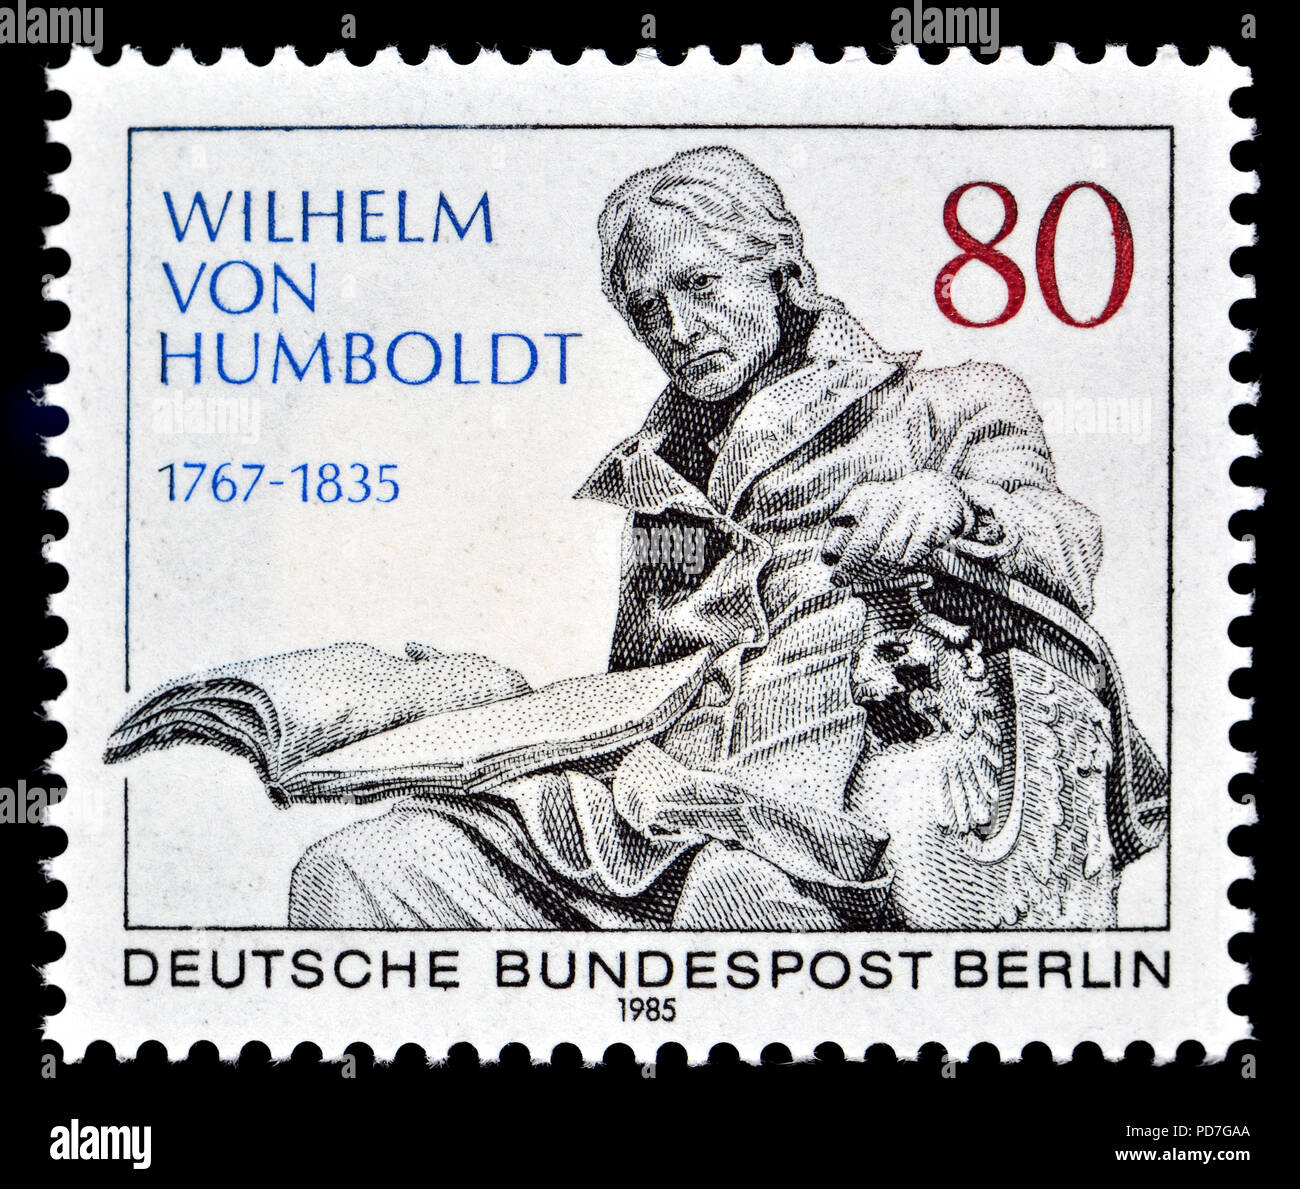 Timbre allemand (Berlin : 1985) : Friedrich Wilhelm Christian Karl Ferdinand von Humboldt (1767 - 1835) Philosophe prussien, linguiste, gouvernement Banque D'Images